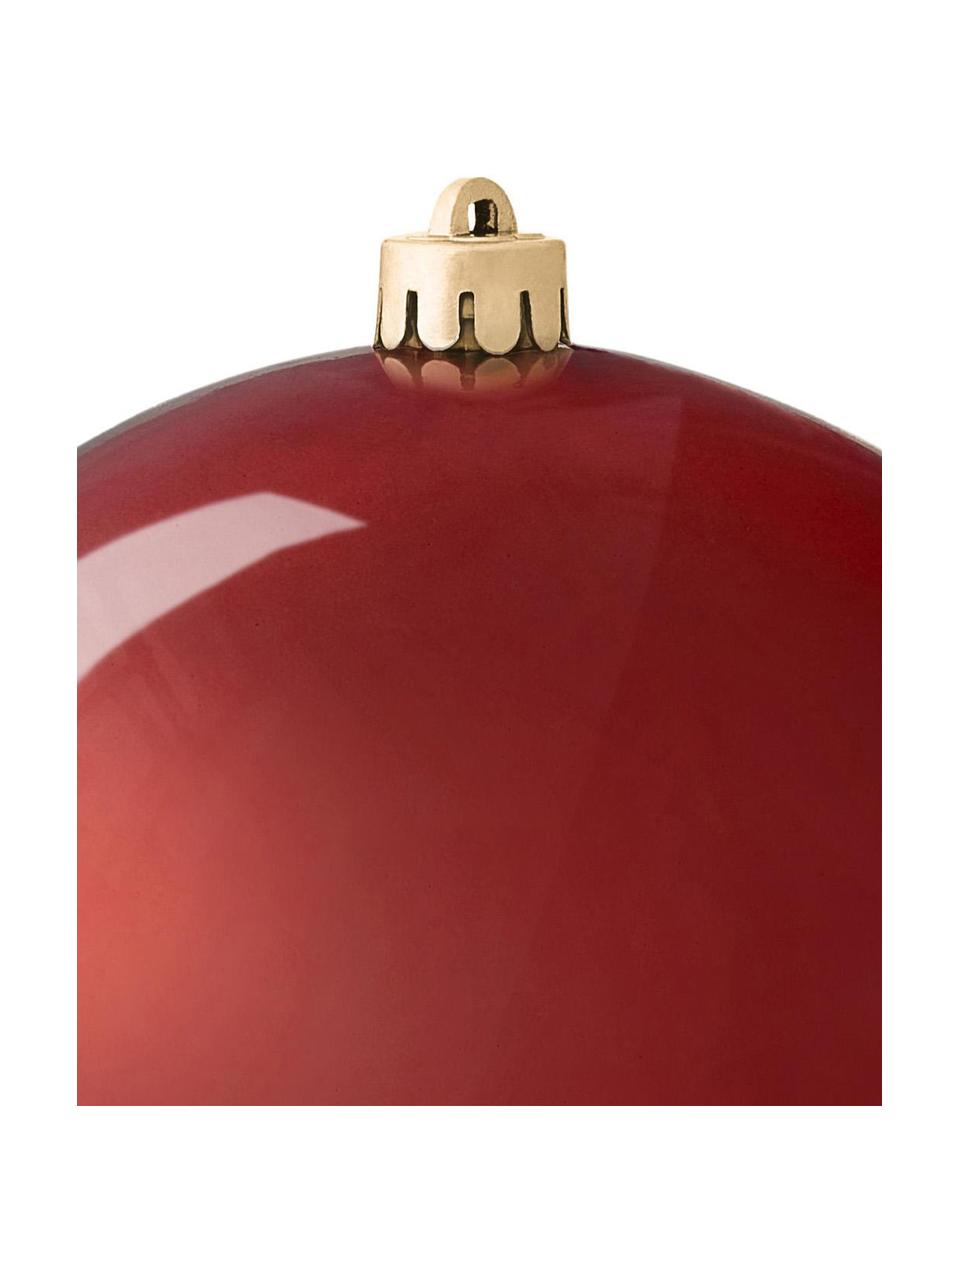 Nerozbitná vianočná ozdoba Stix, Nerozbitný plast, Červená, Ø 14 cm, 2 ks